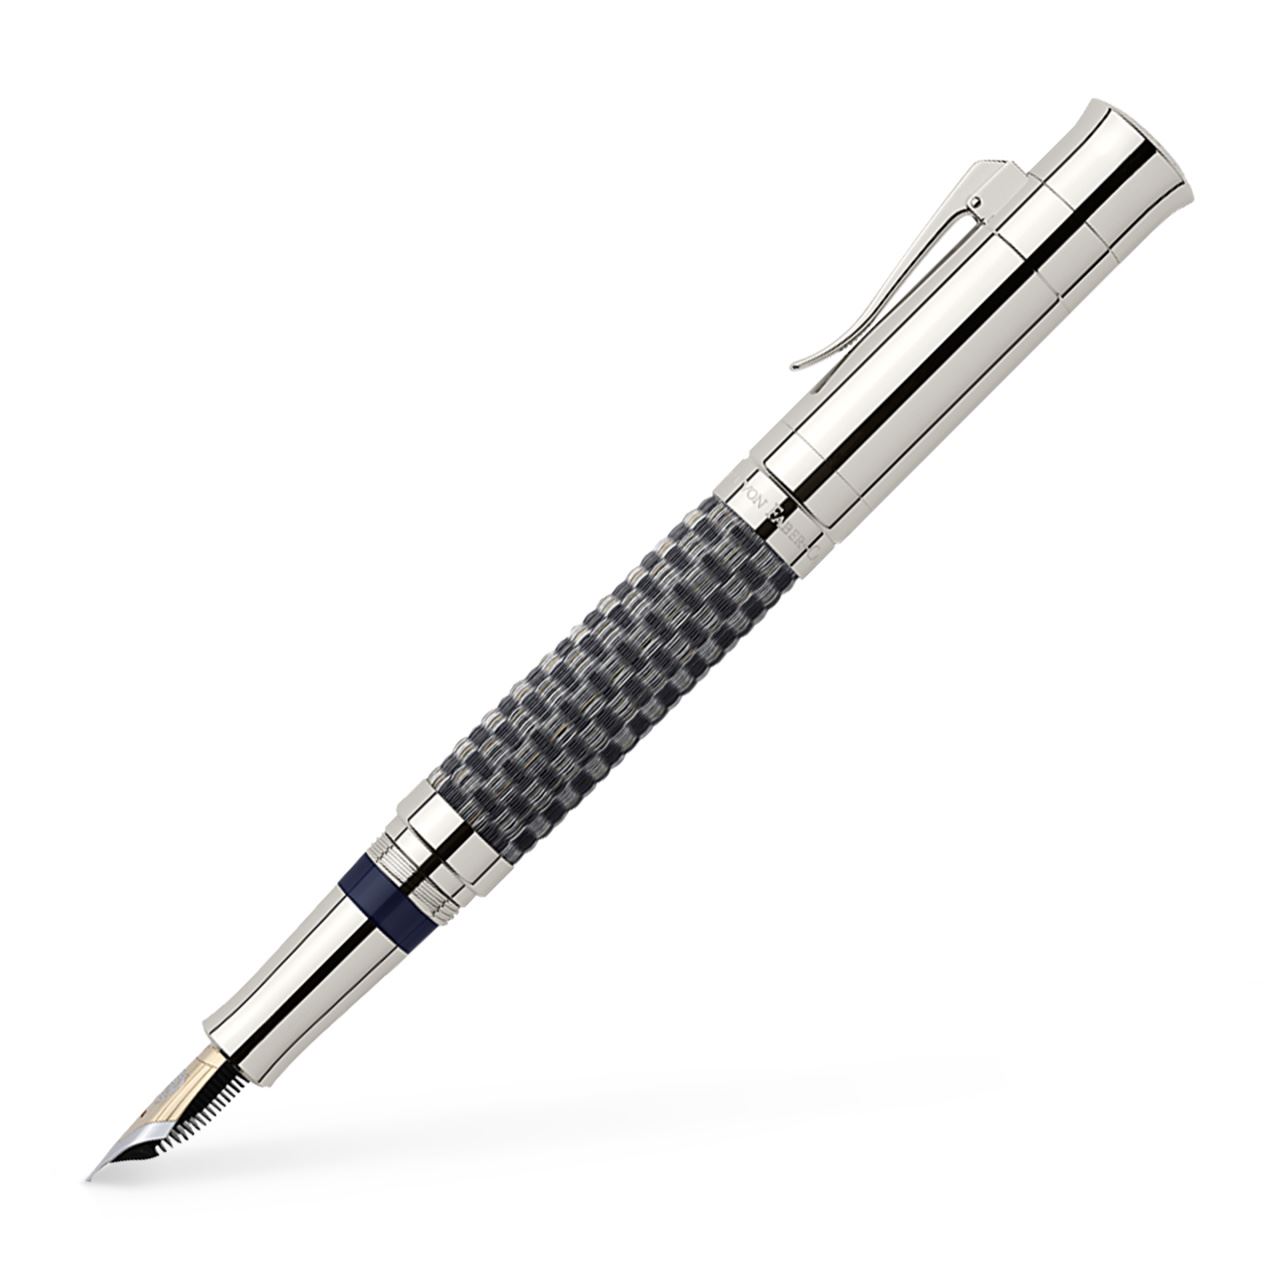 Graf-von-Faber-Castell - Fountain pen Pen of the Year 2009 Fine